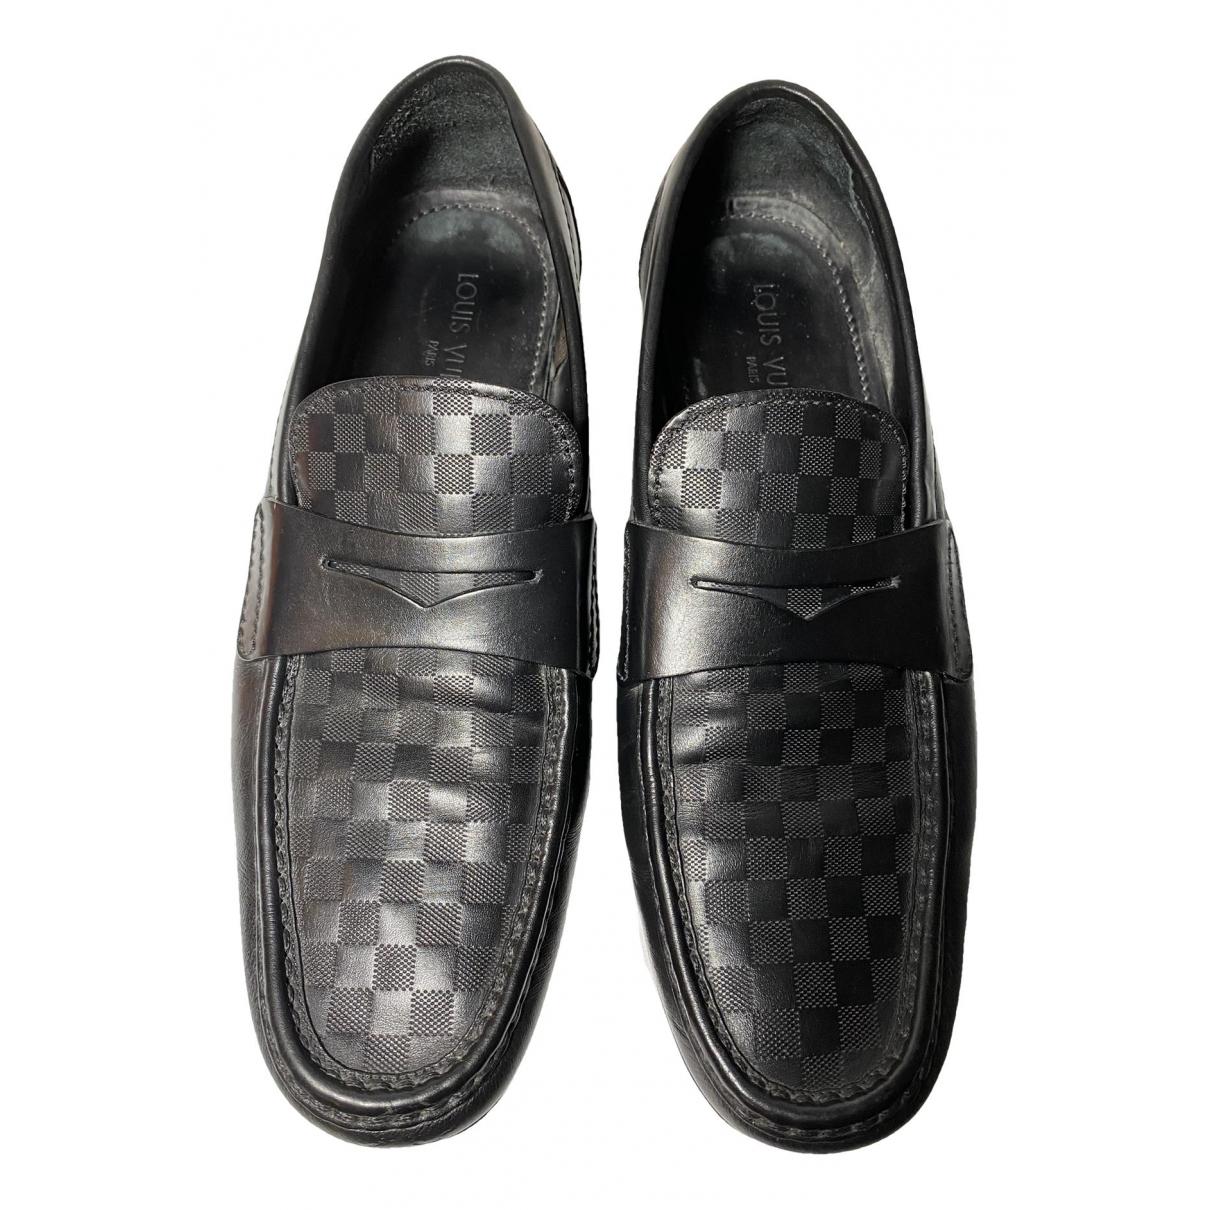 Hockenheim Moccasin Damier Graphite Canvas - Men - Shoes